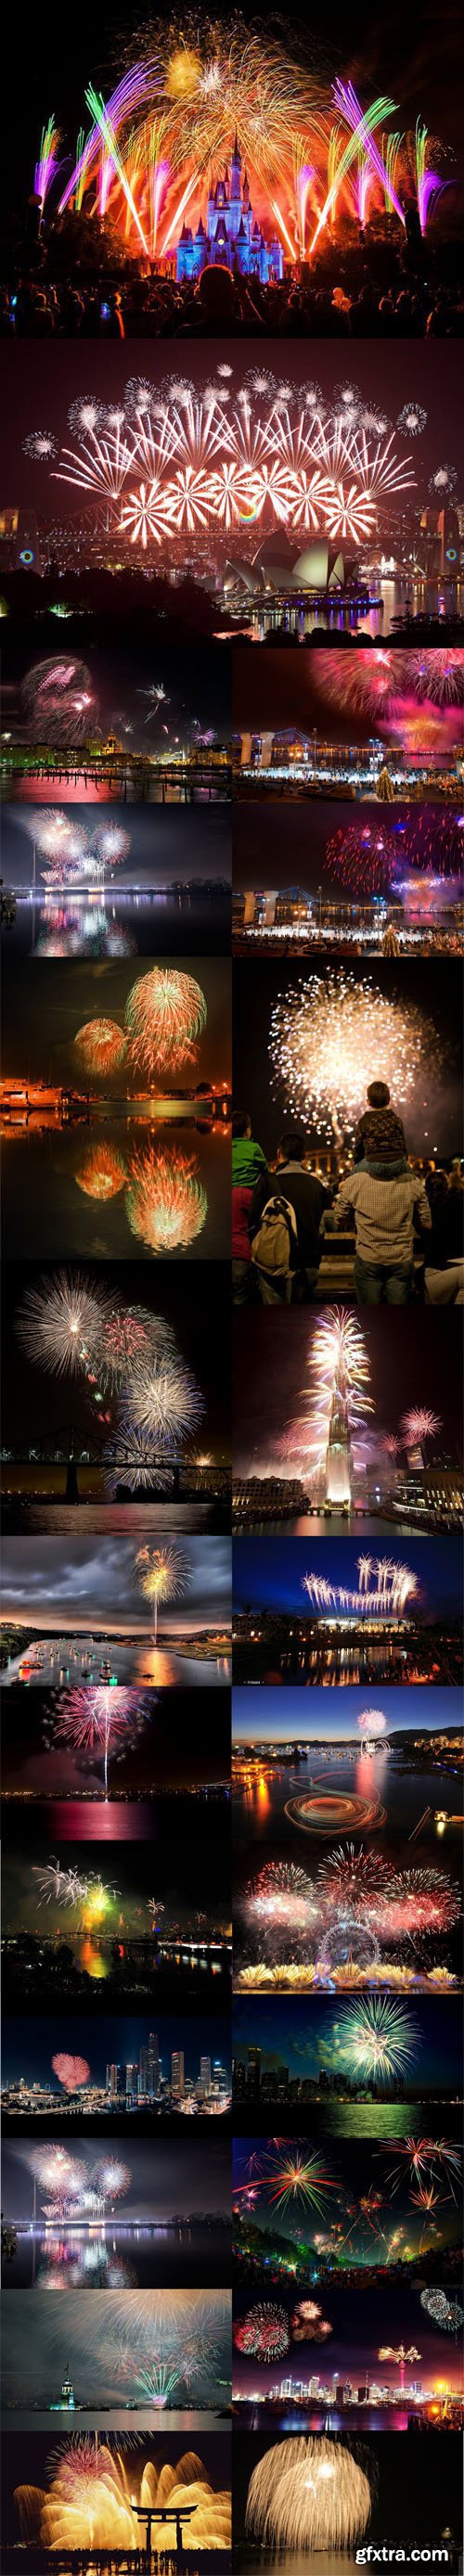 Around the World - New Year Fireworks Photos